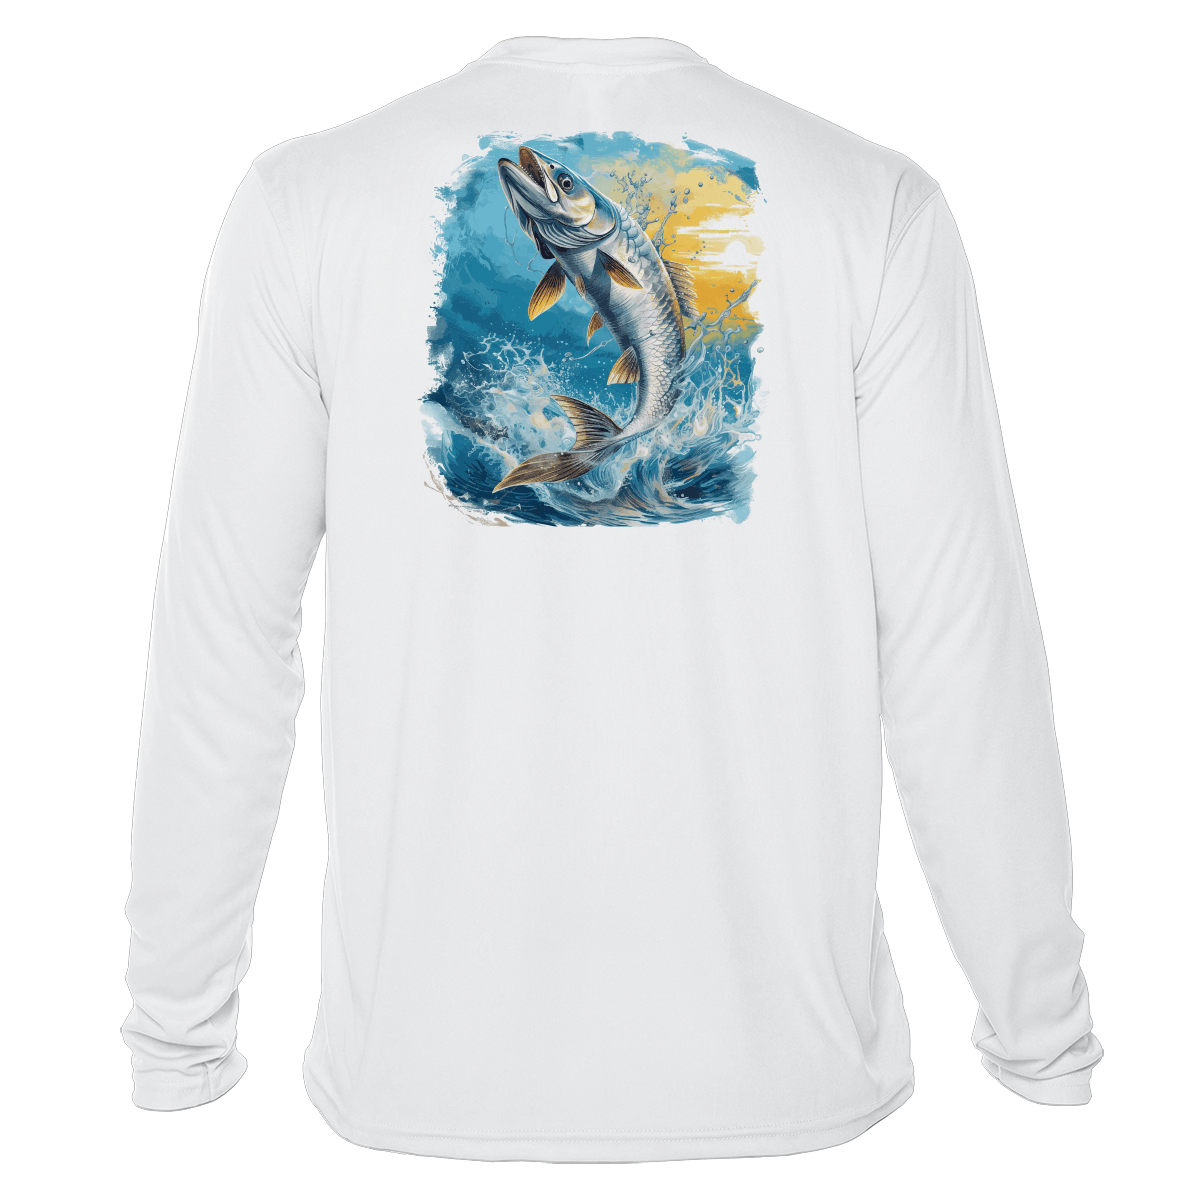 Men's White Long Sleeve Fishing Shirt